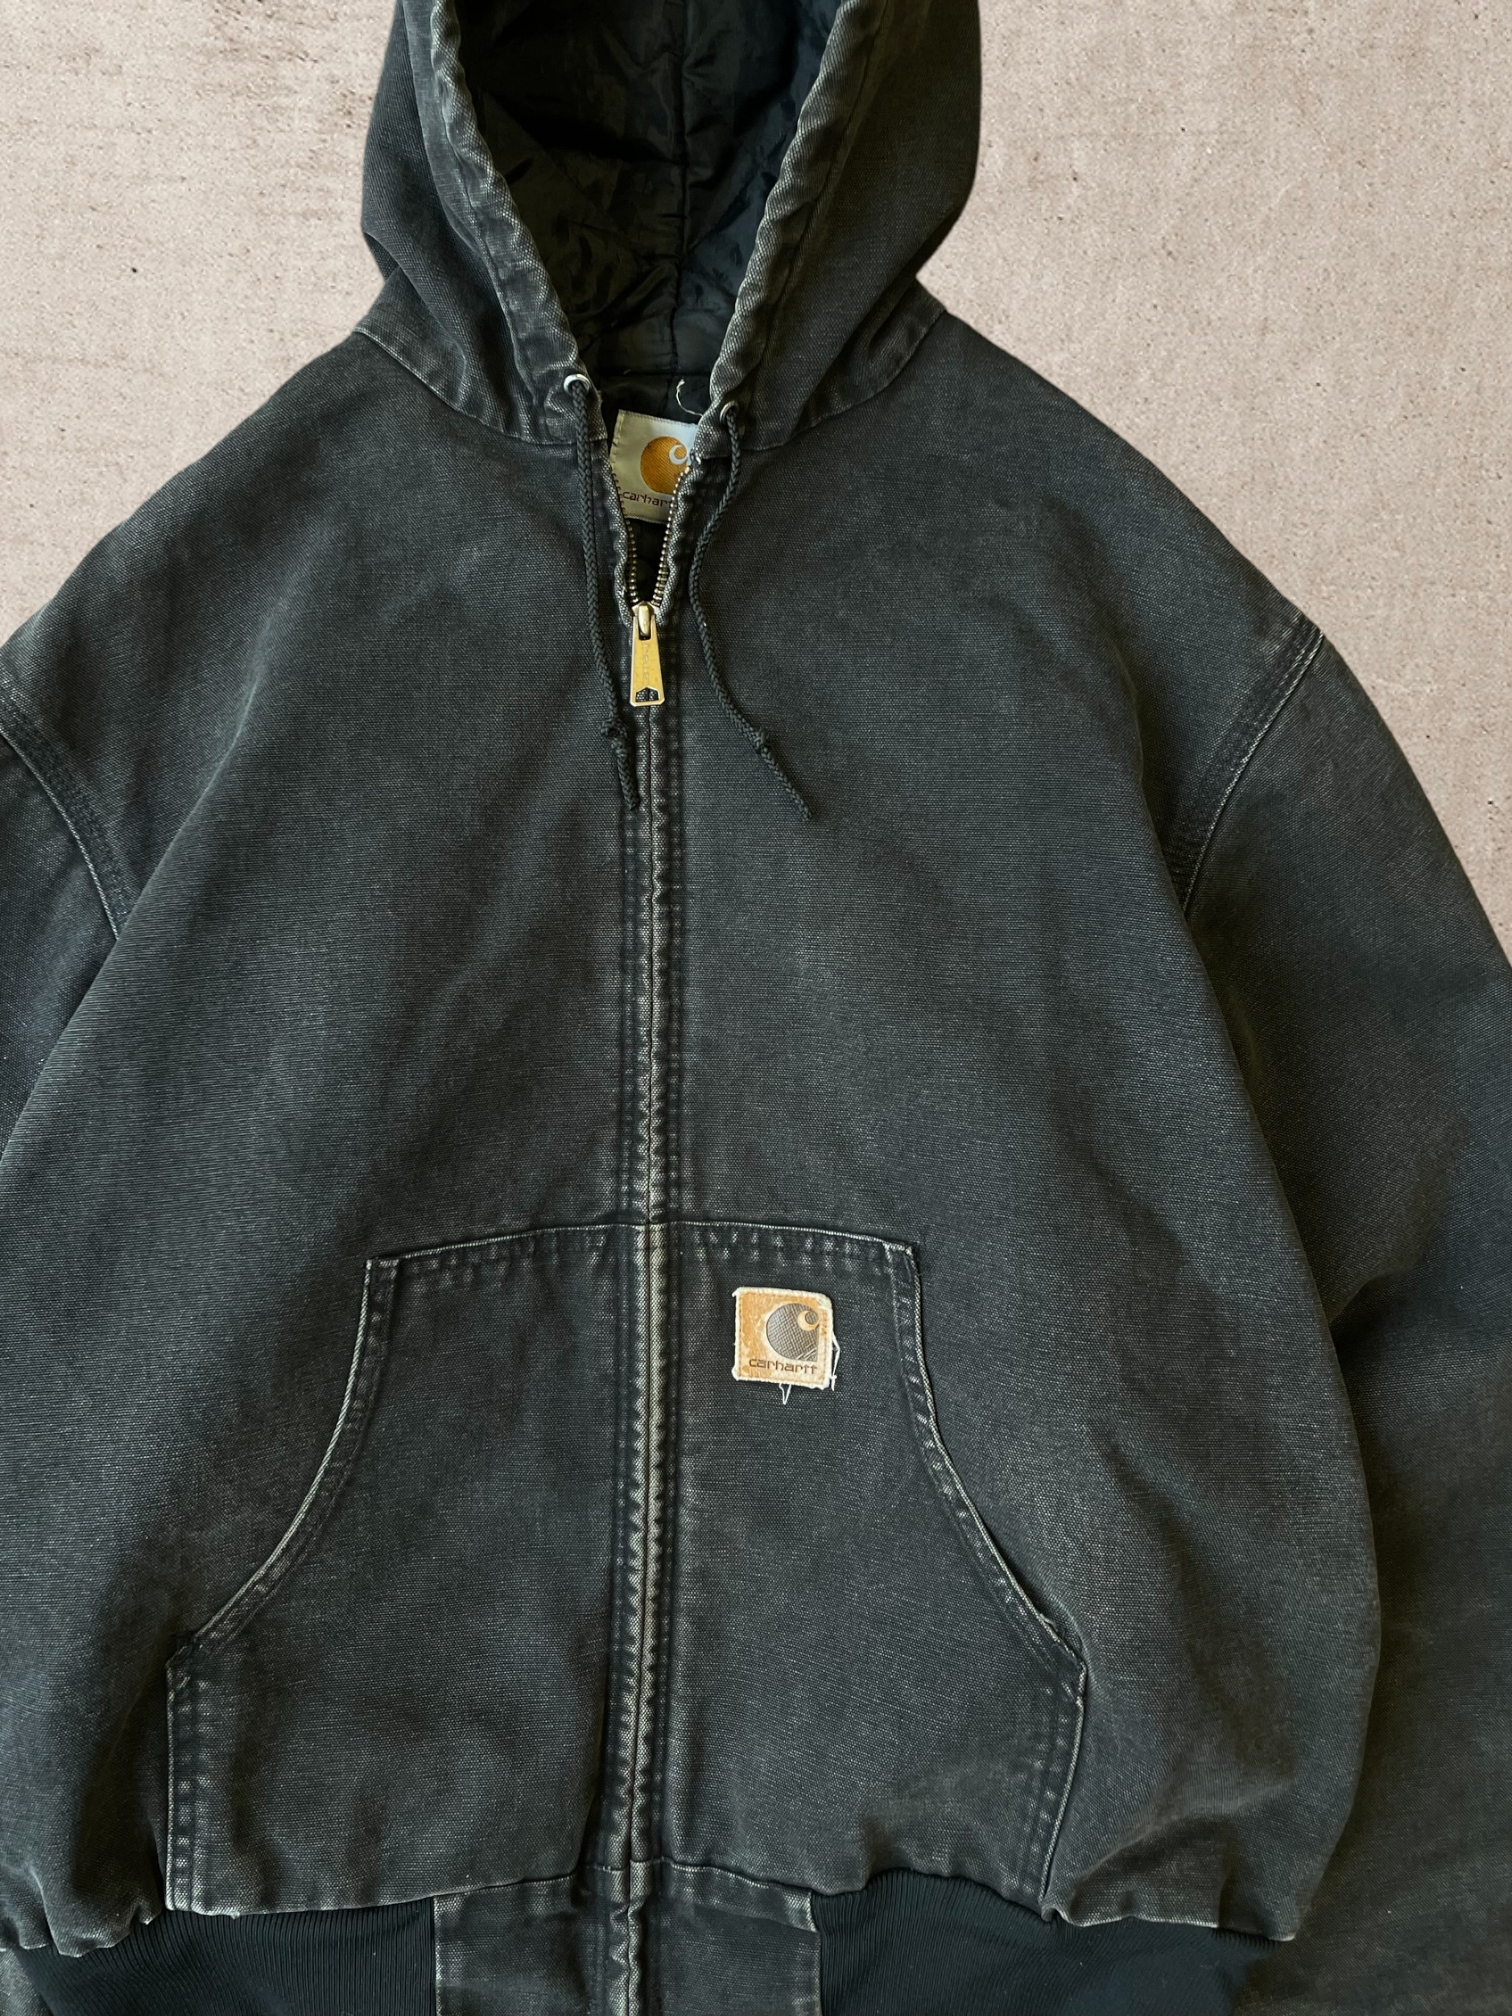 80s Carhartt Hooded Jacket - X-Large